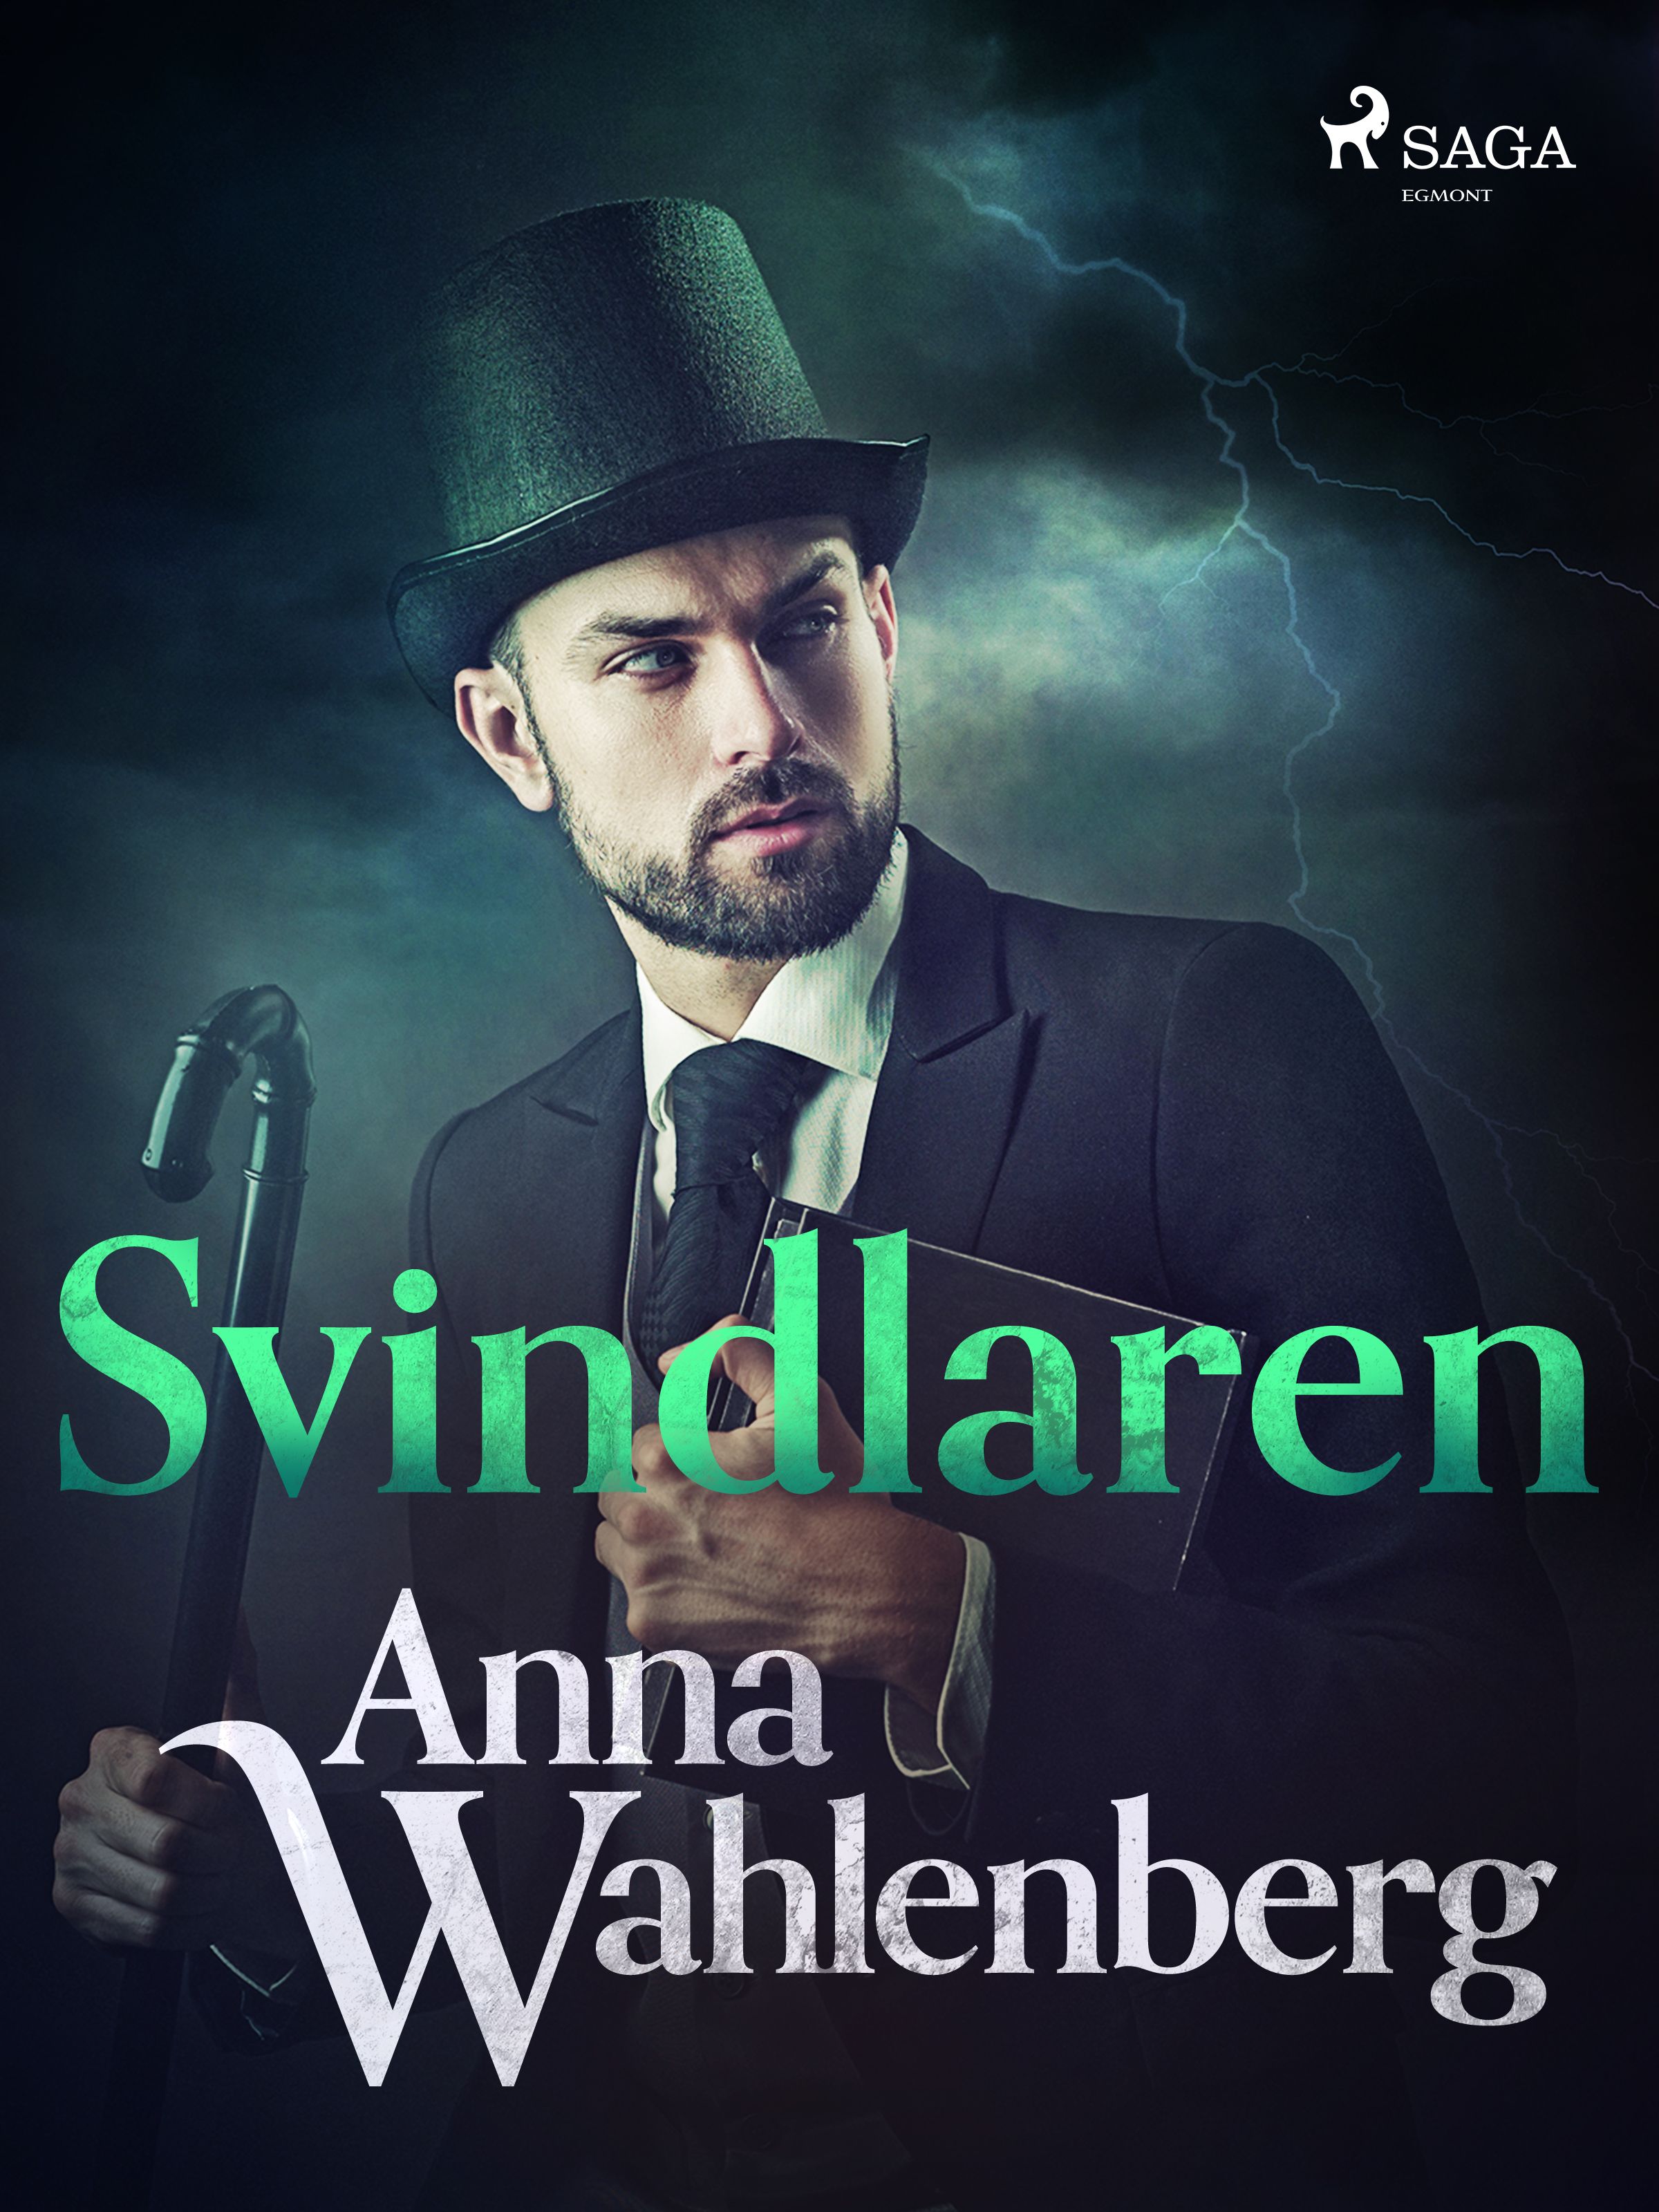 Svindlaren, eBook by Anna Wahlenberg